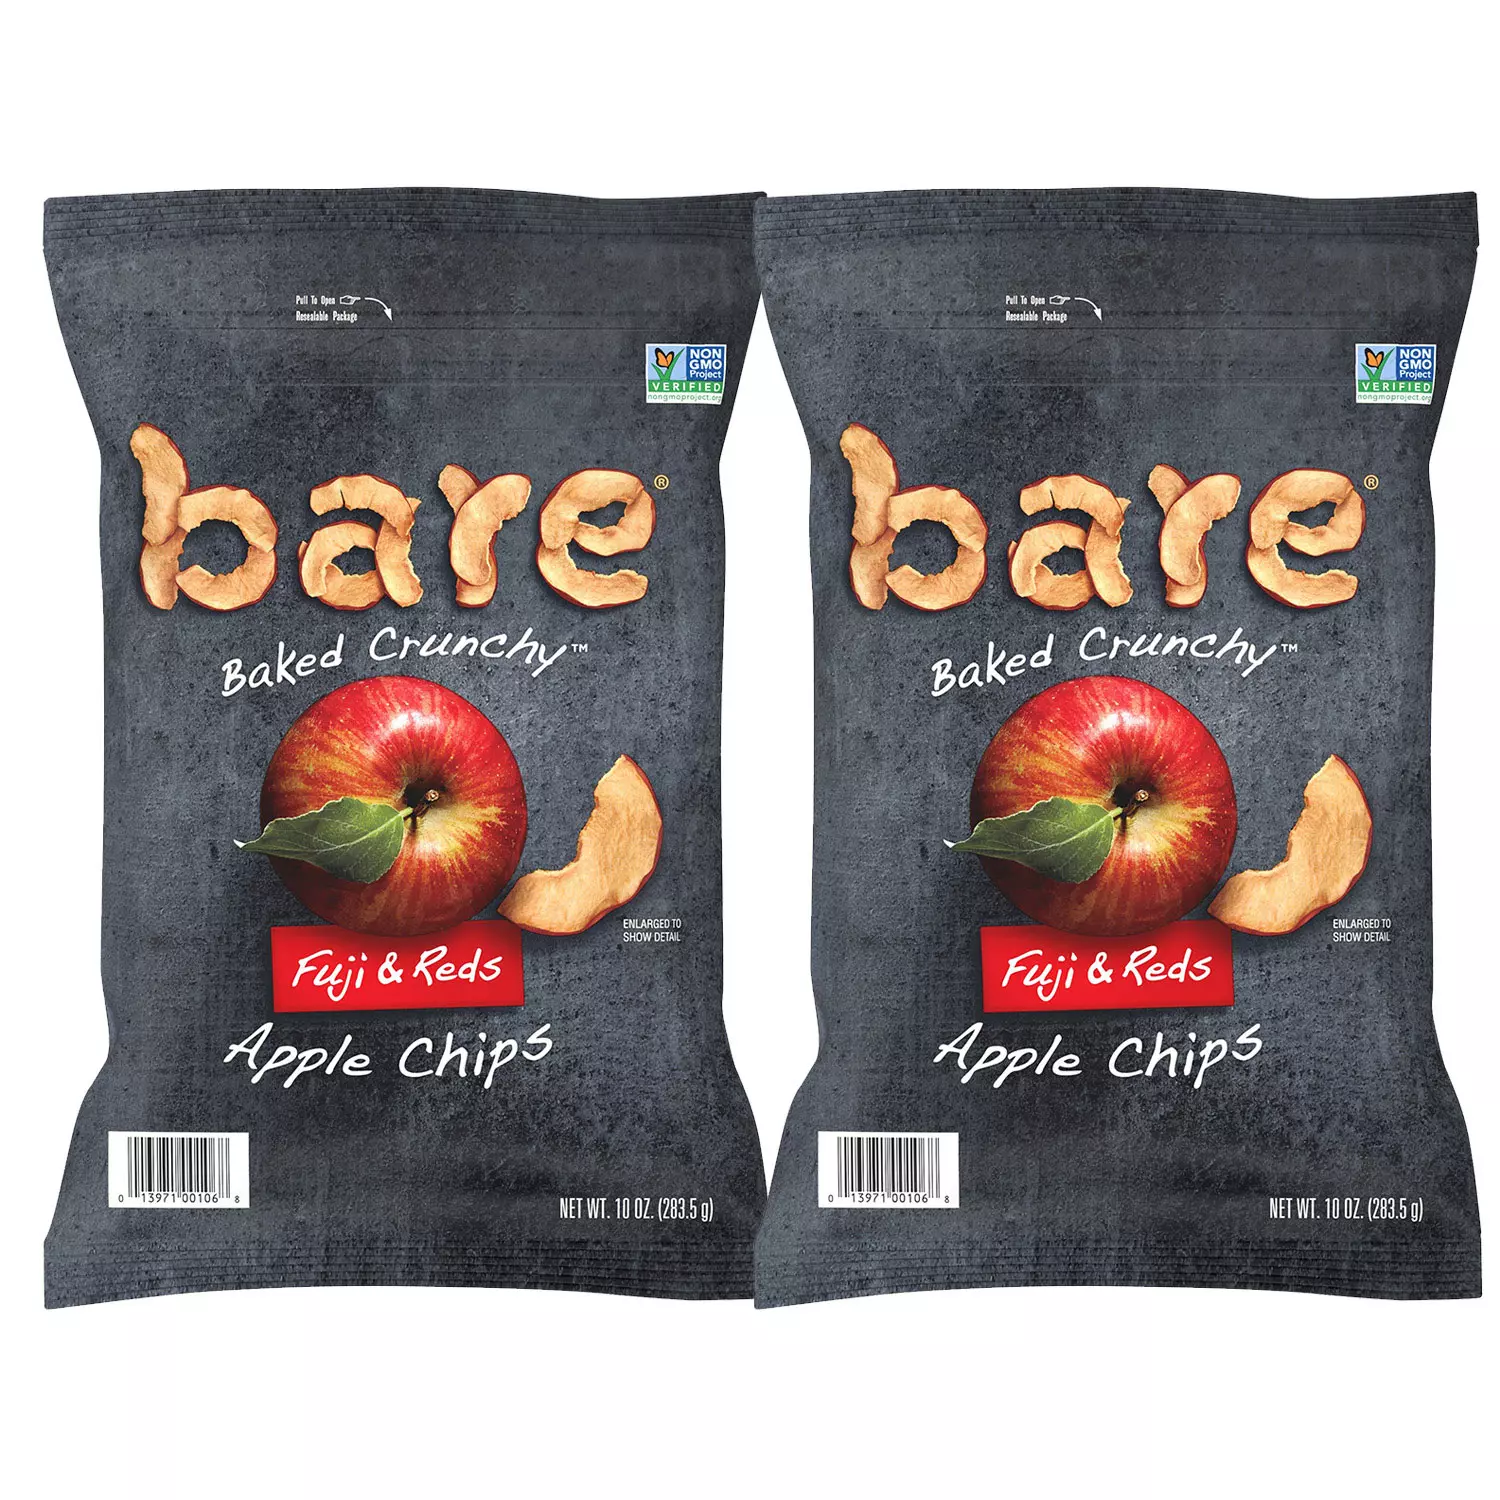 Bare Baked Crunchy Fuji & Reds Apple Chips (10 oz., 2 pk.)